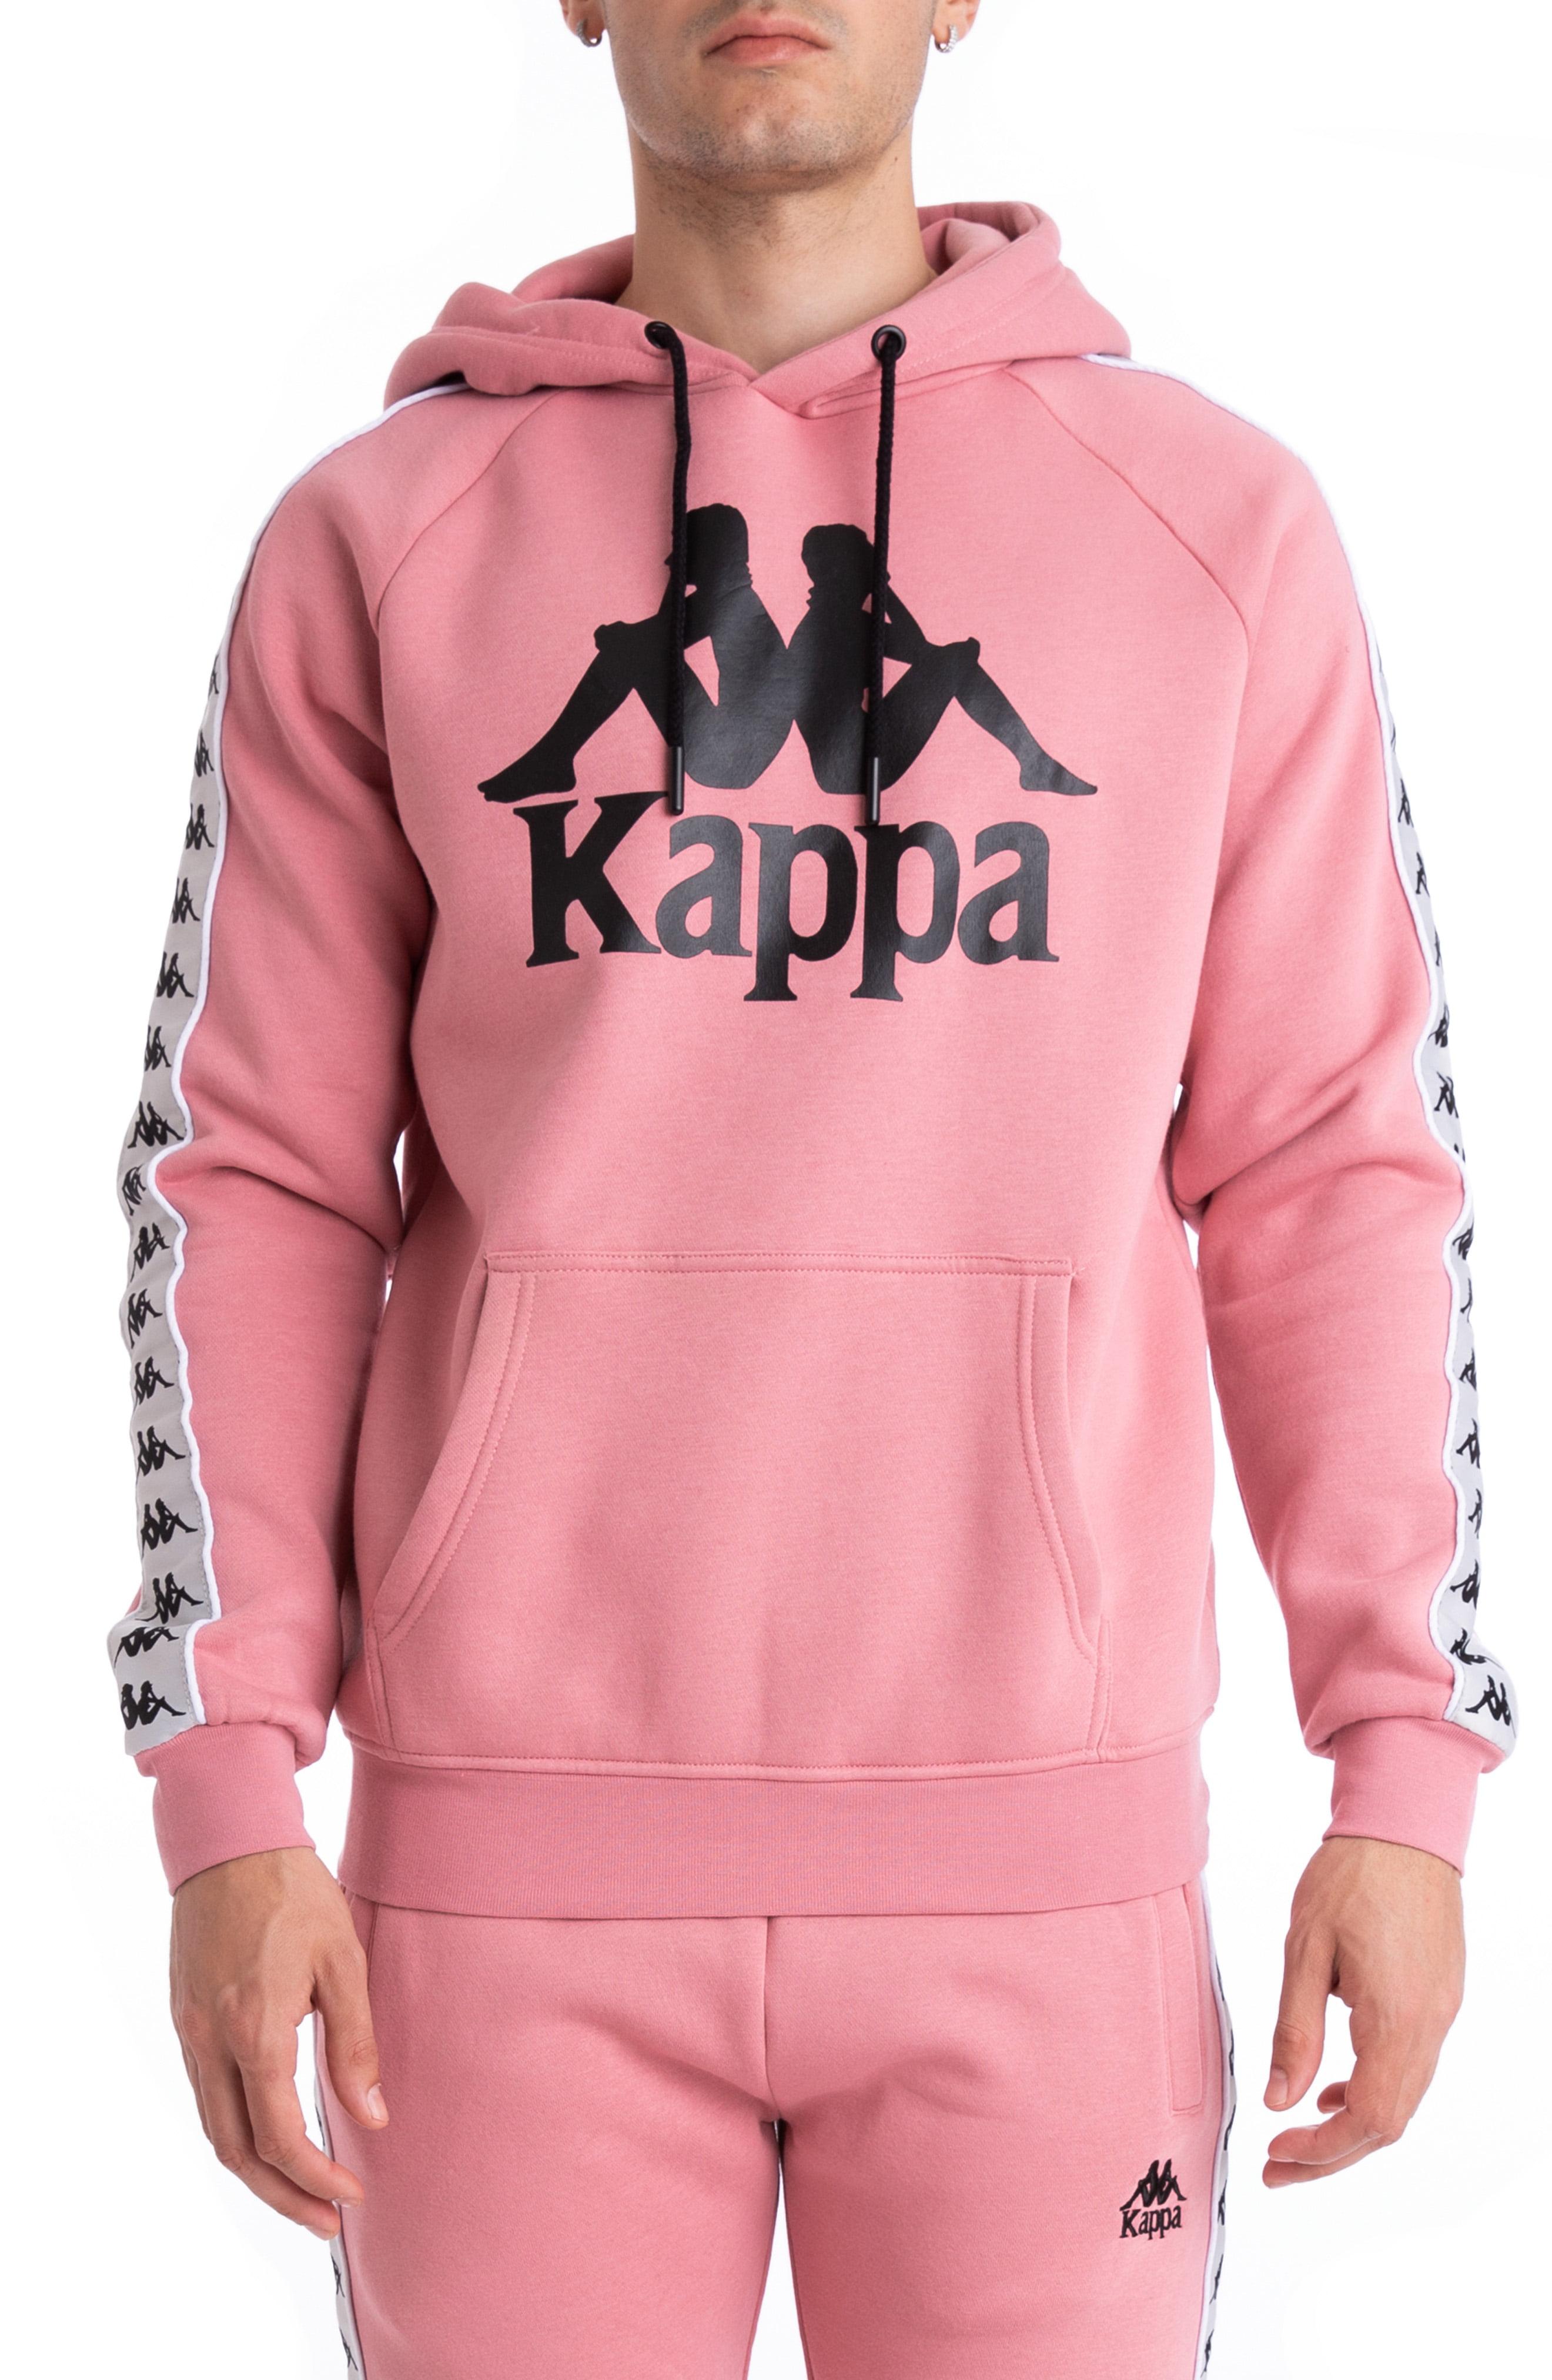 kappa pink sweatshirt